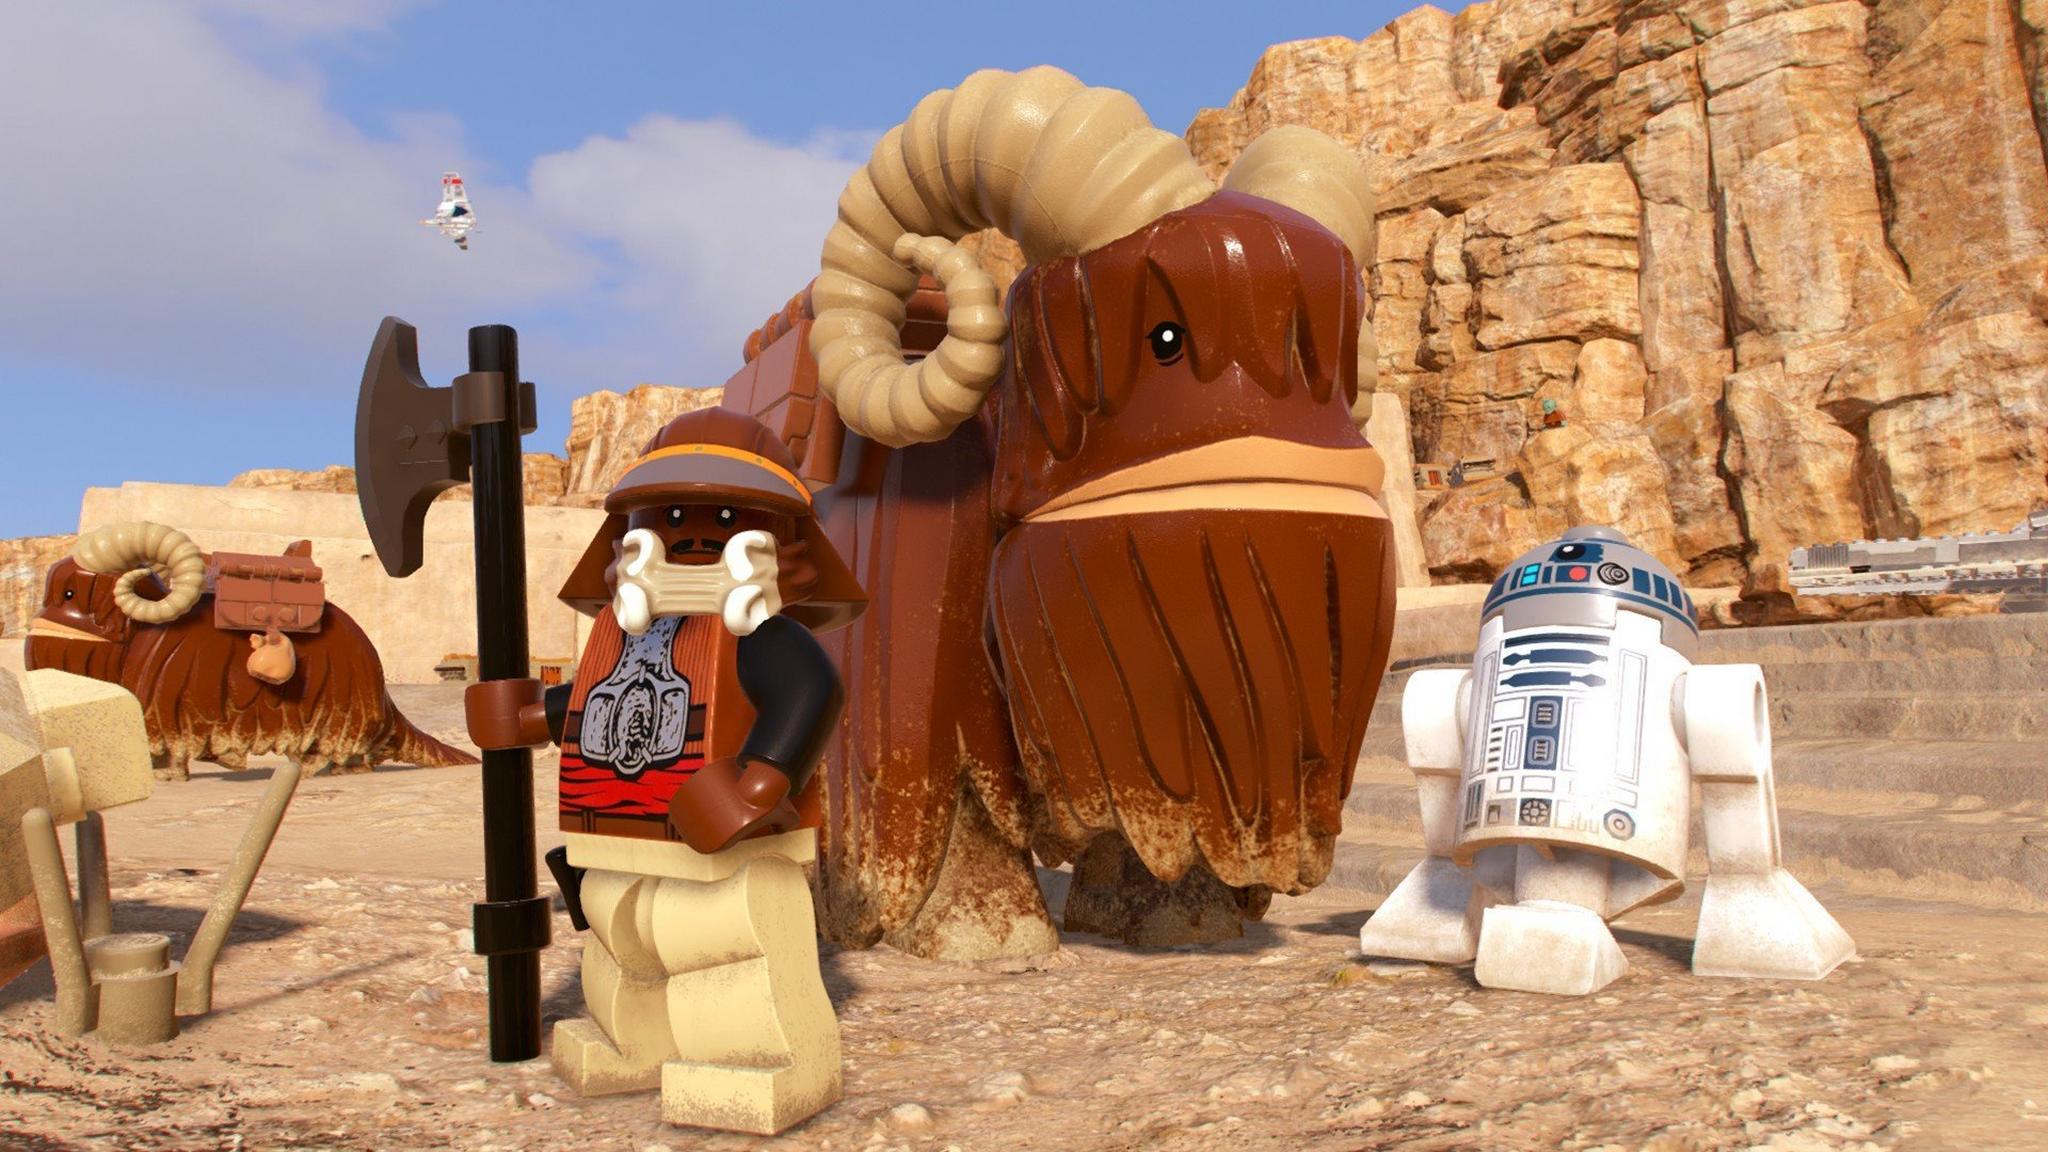 Lego Star Wars The Skywalker Saga - Standard Edition - Xbox Game